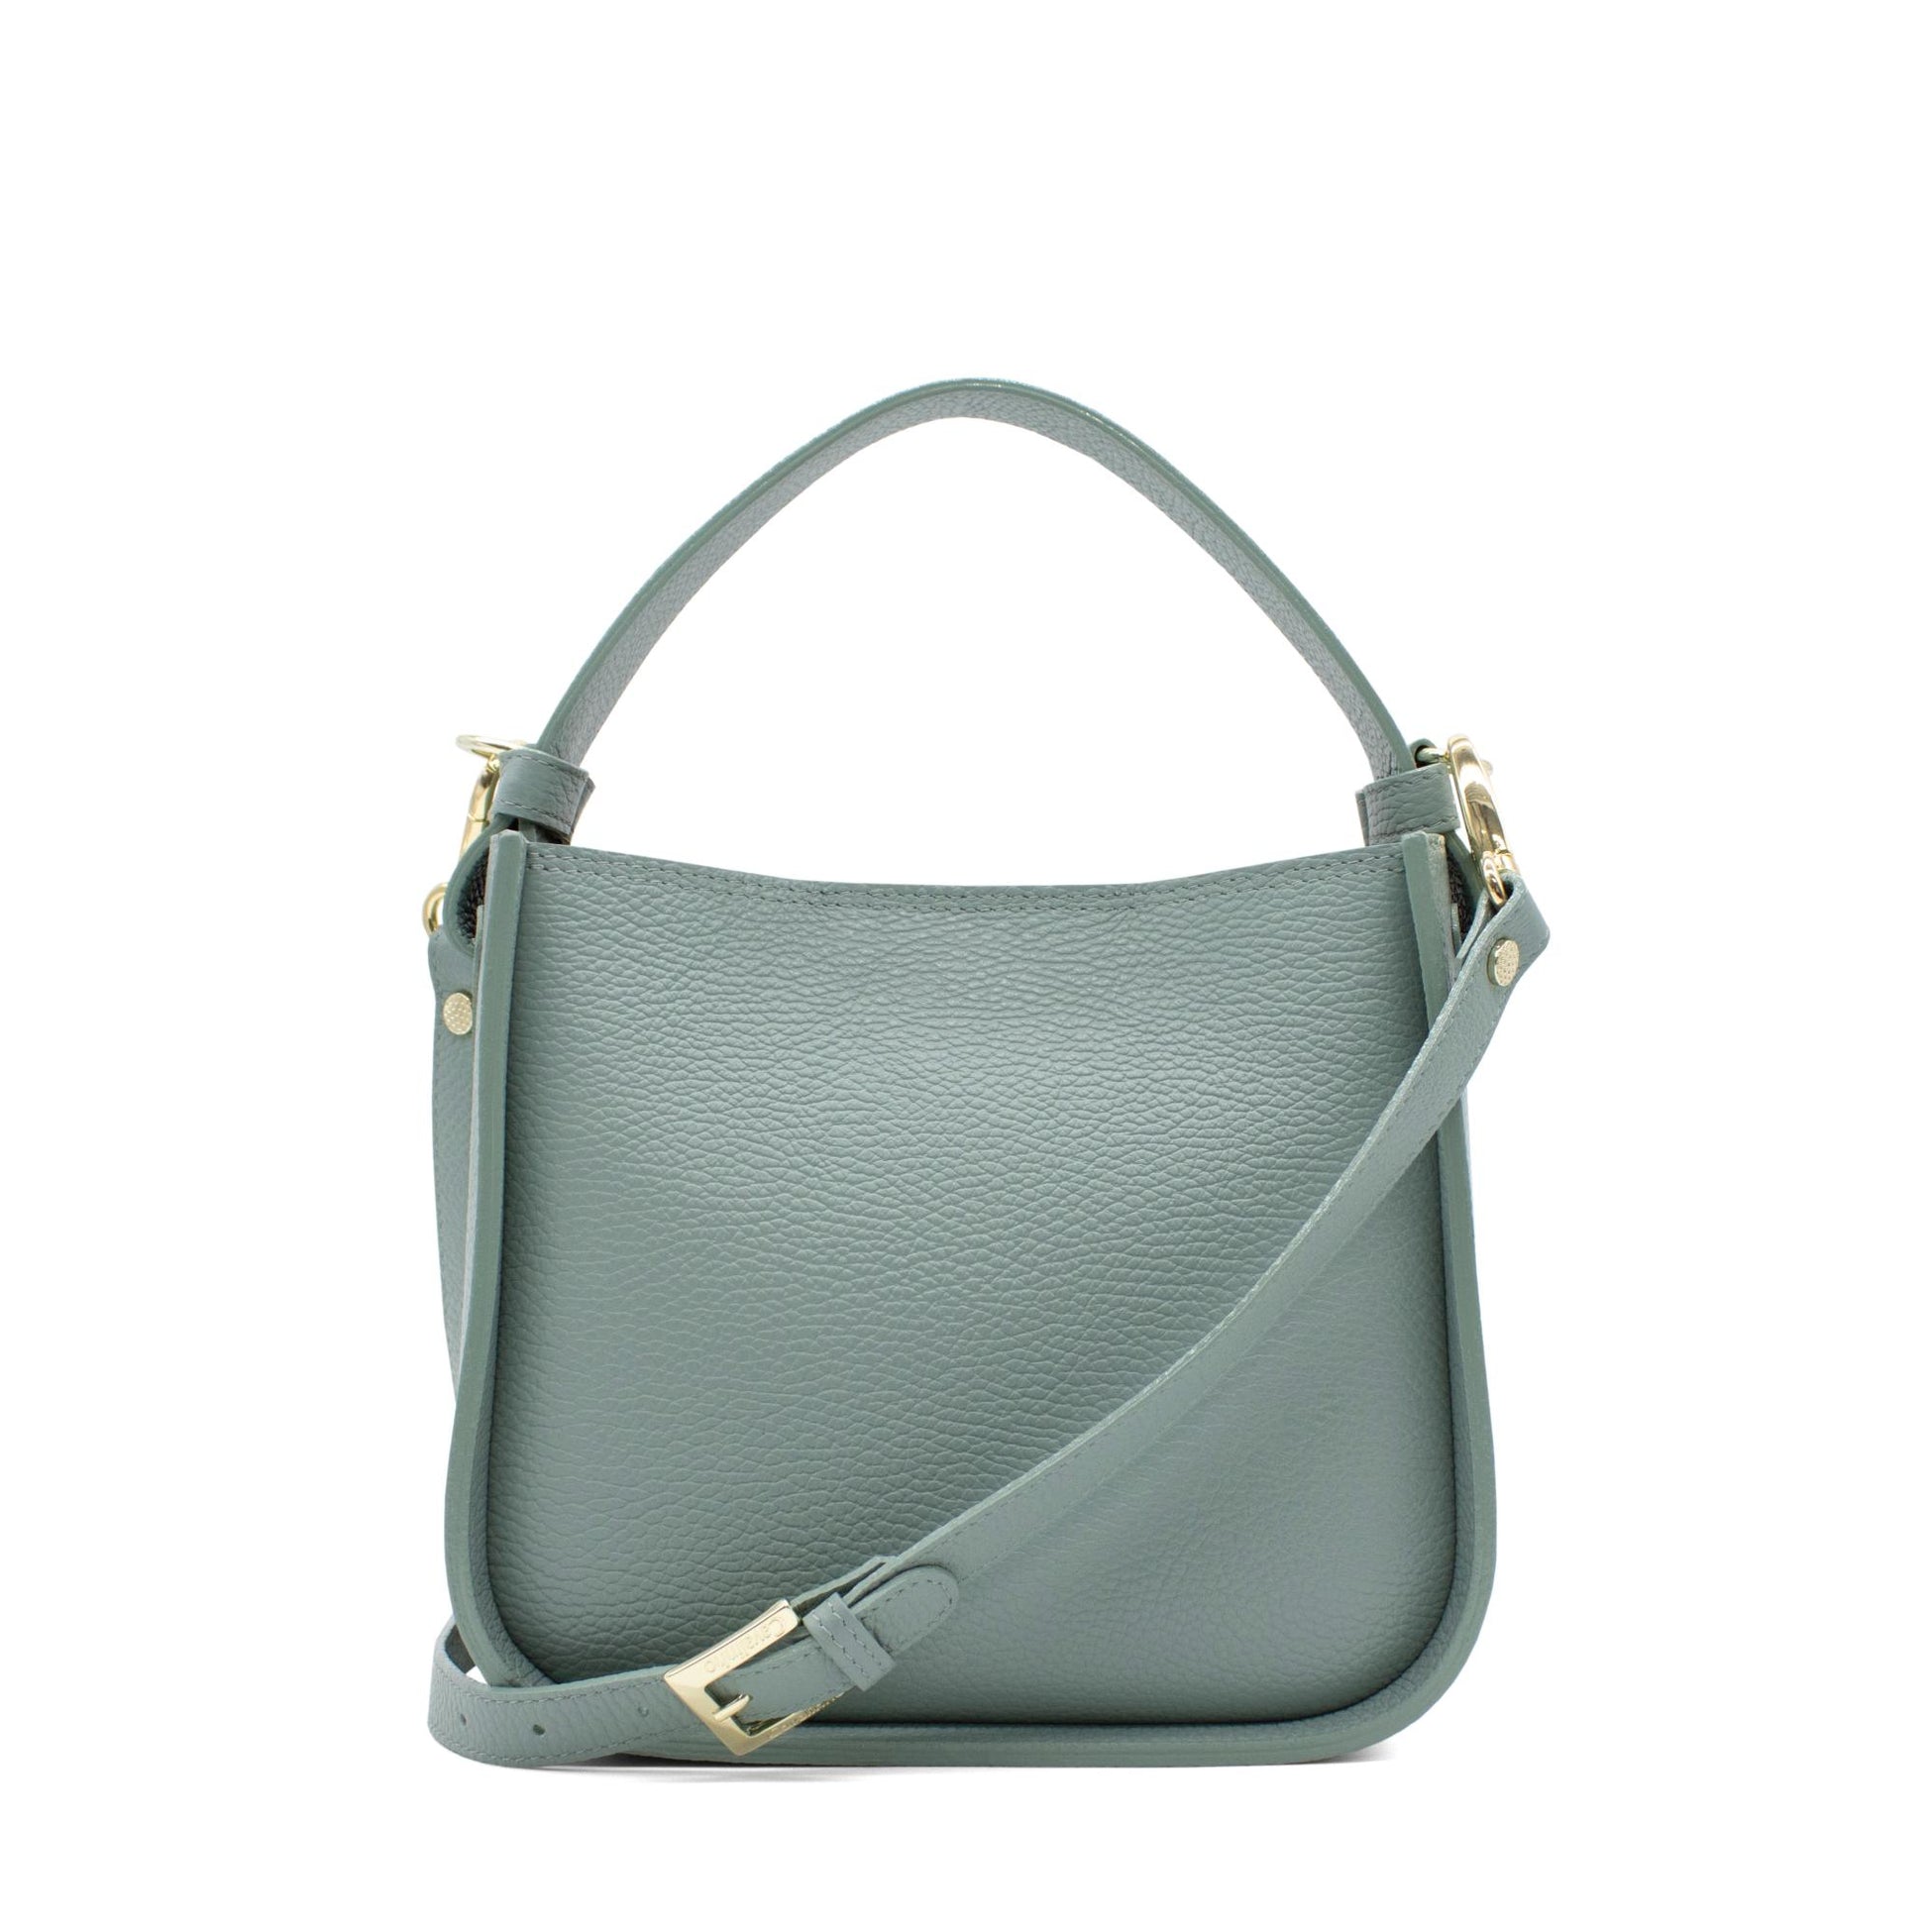 #color_ DarkSeaGreen | Cavalinho Muse Leather Handbag - DarkSeaGreen - 18300475.09_4